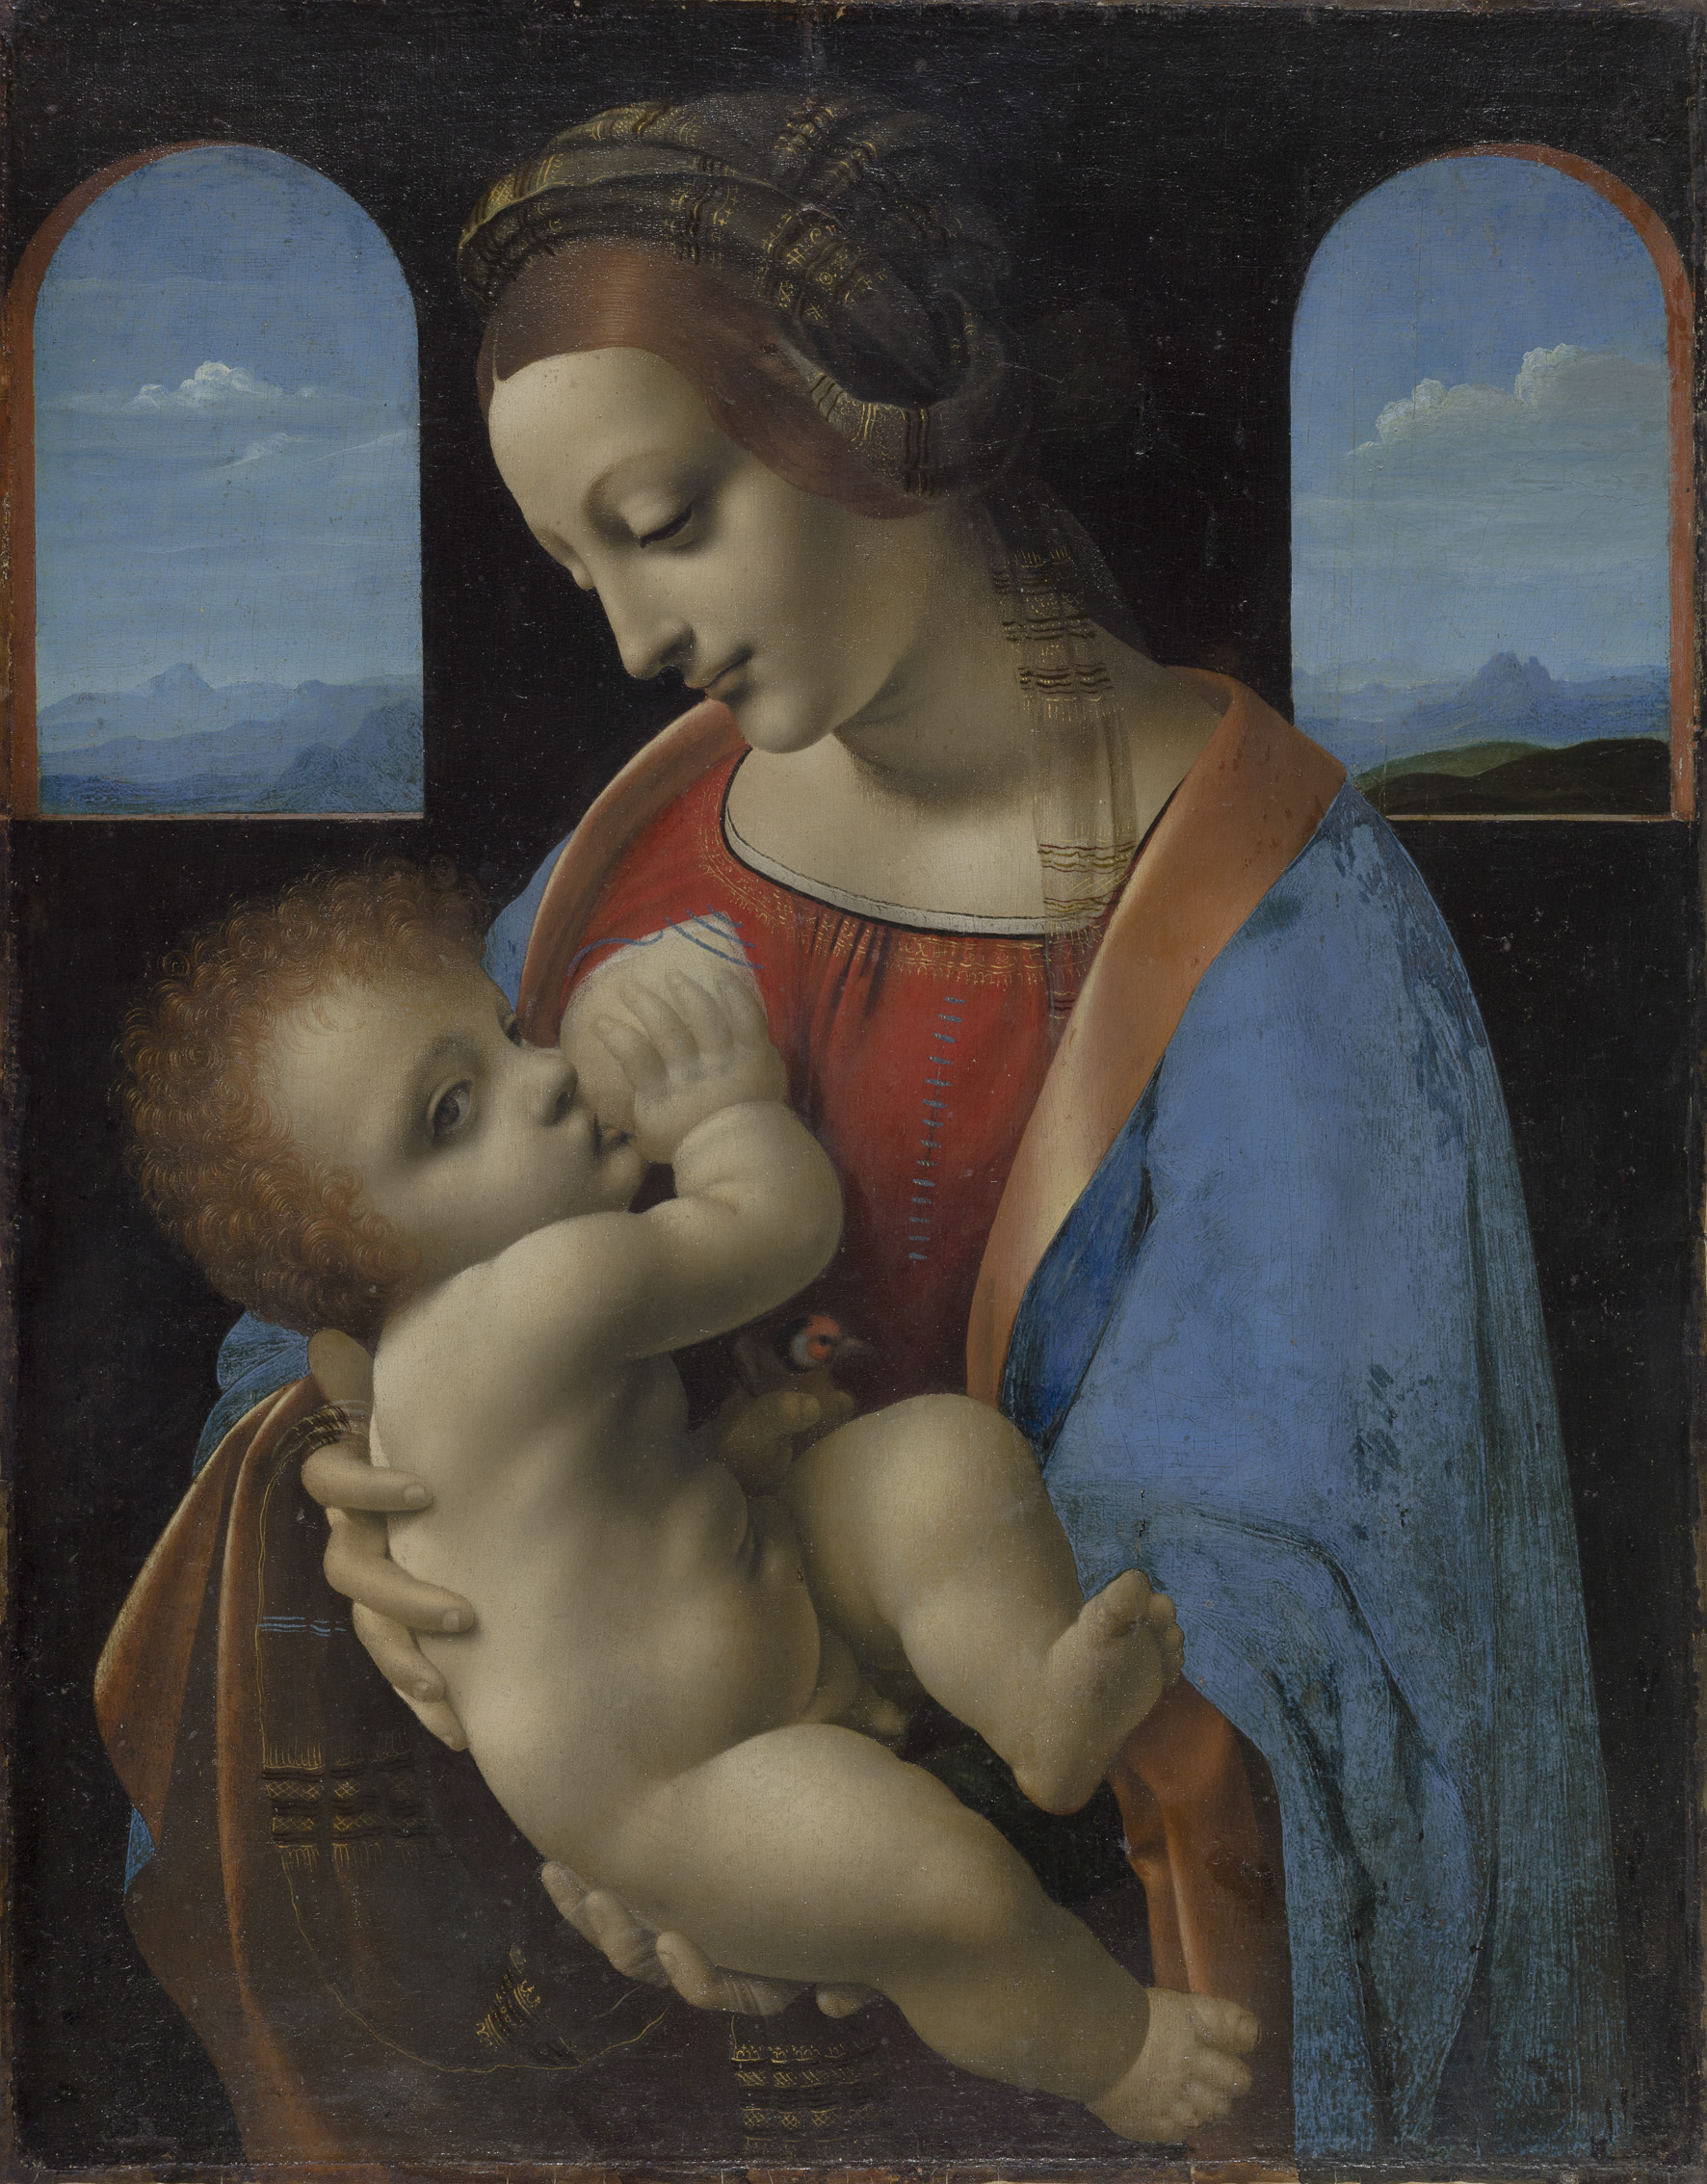 Madonna Litta by Leonardo da Vinci - ca. 1490 Museo Poldi Pezzoli